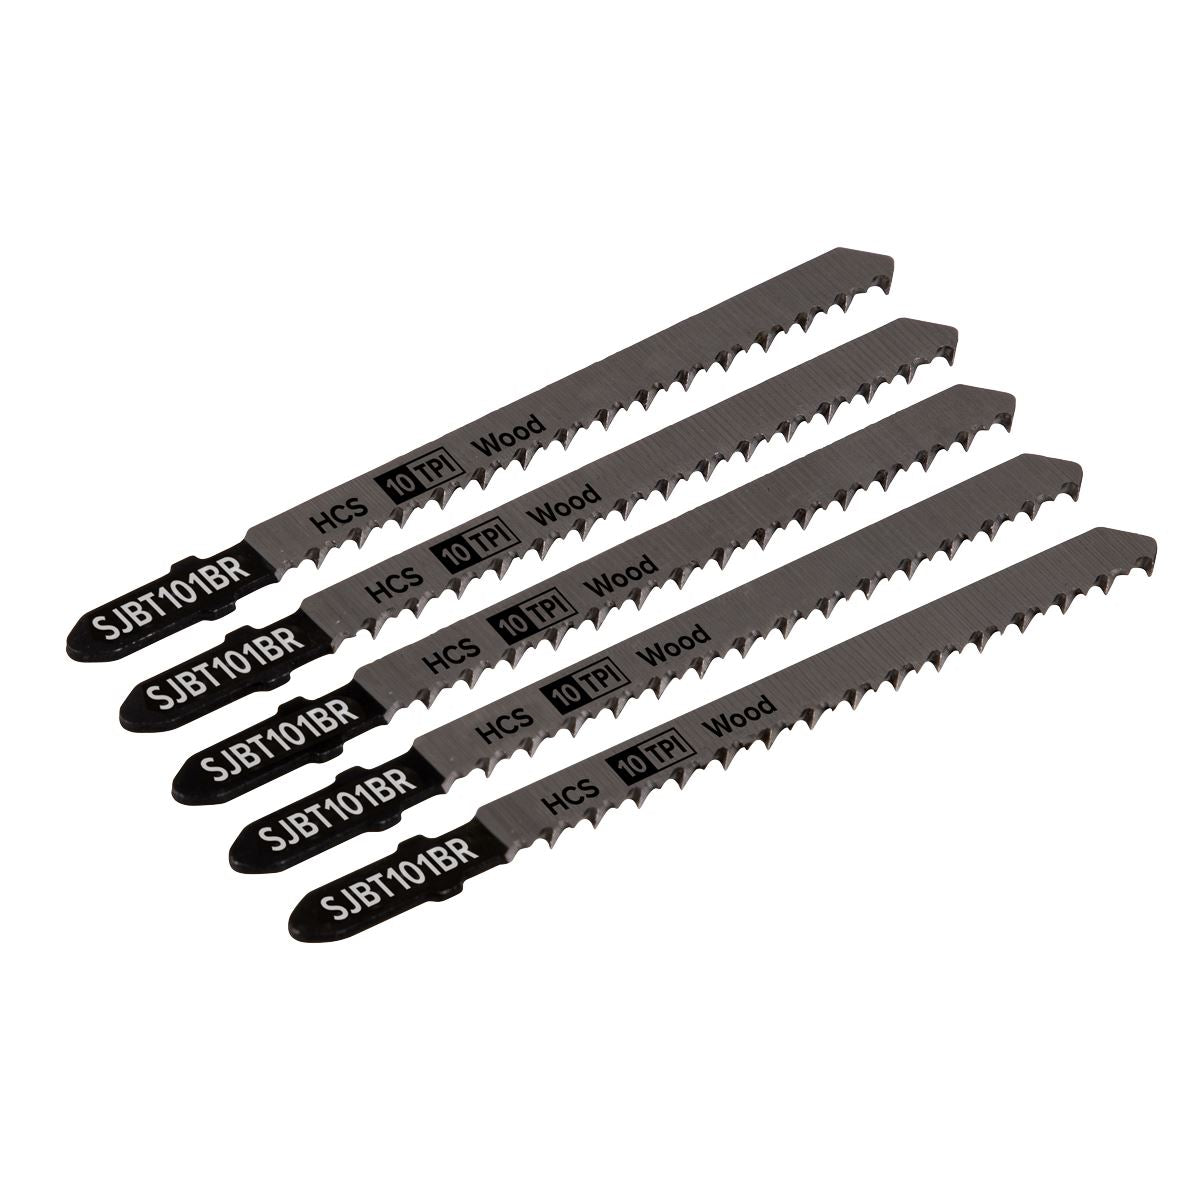 Sealey Jigsaw Blade Hard Wood Downward Cut 100mm 10tpi - Pack of 5